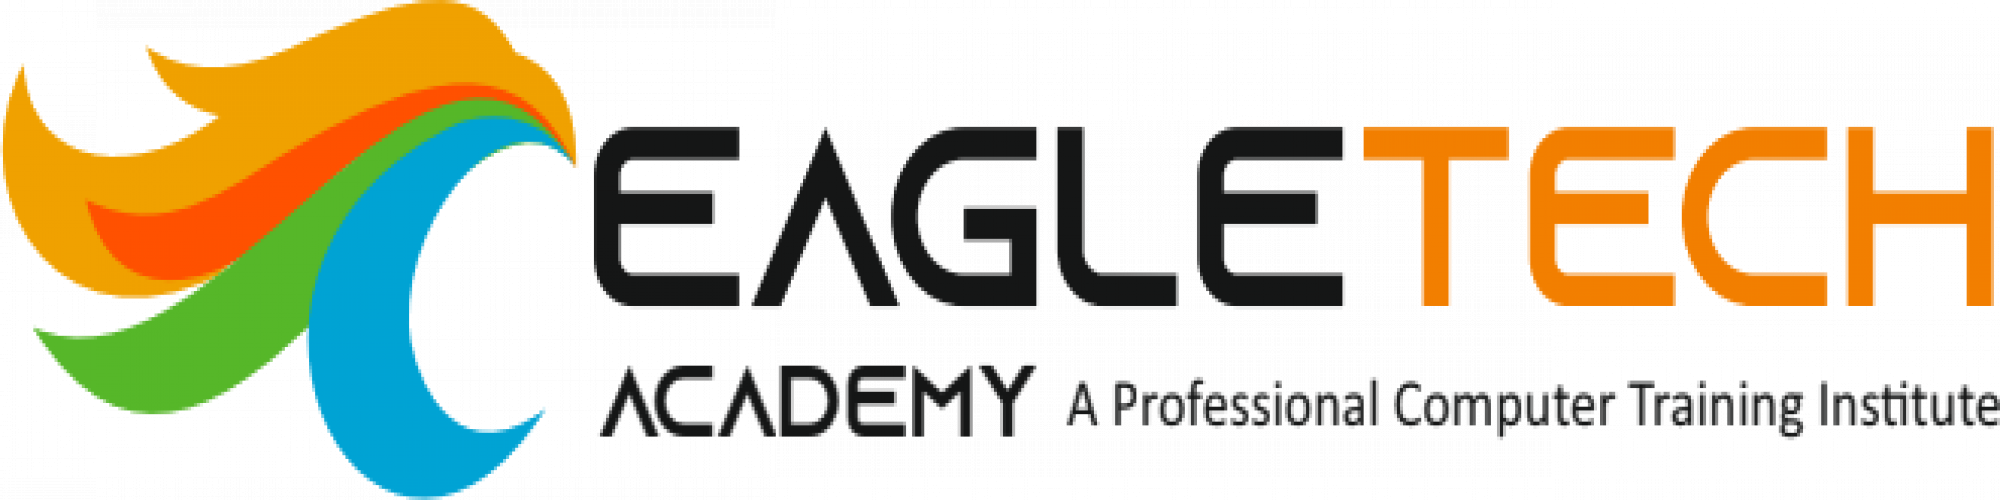 Best Digital Marketing Courses in Kolkata | App Development | Computer Training Center Near Me - Eagle Tech Academy cover